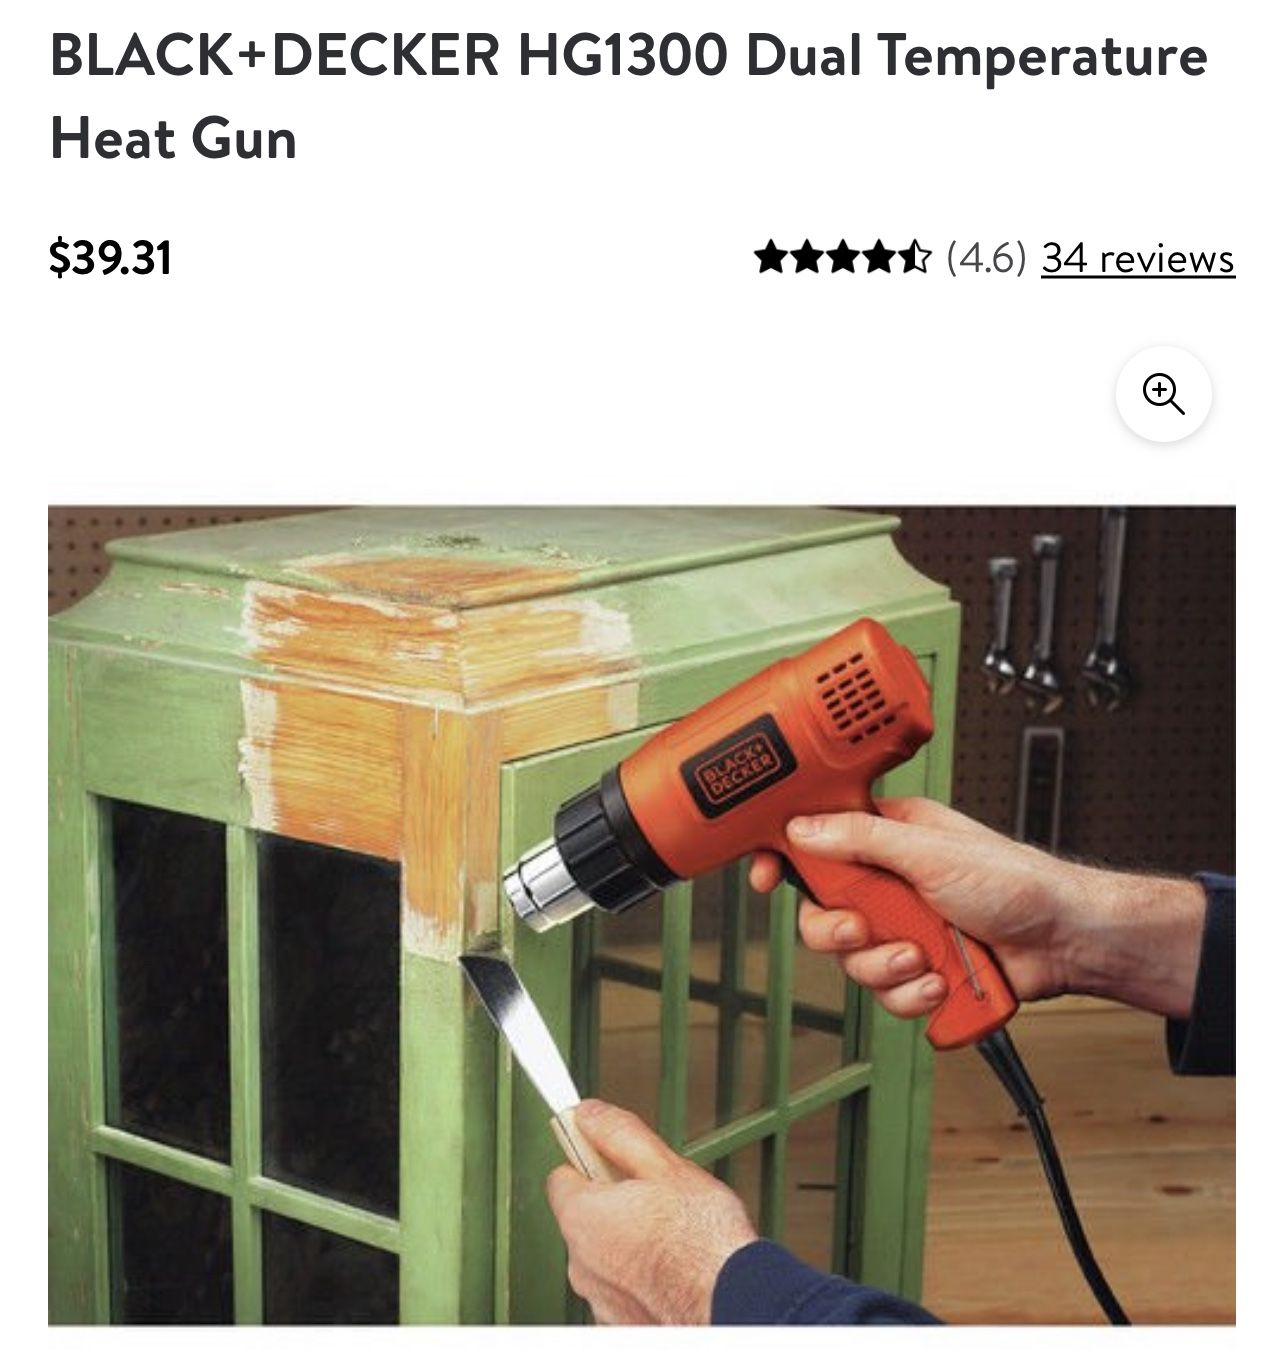 BLACK+DECKER Heat Gun with Dual Temperature Settings (HG1300)